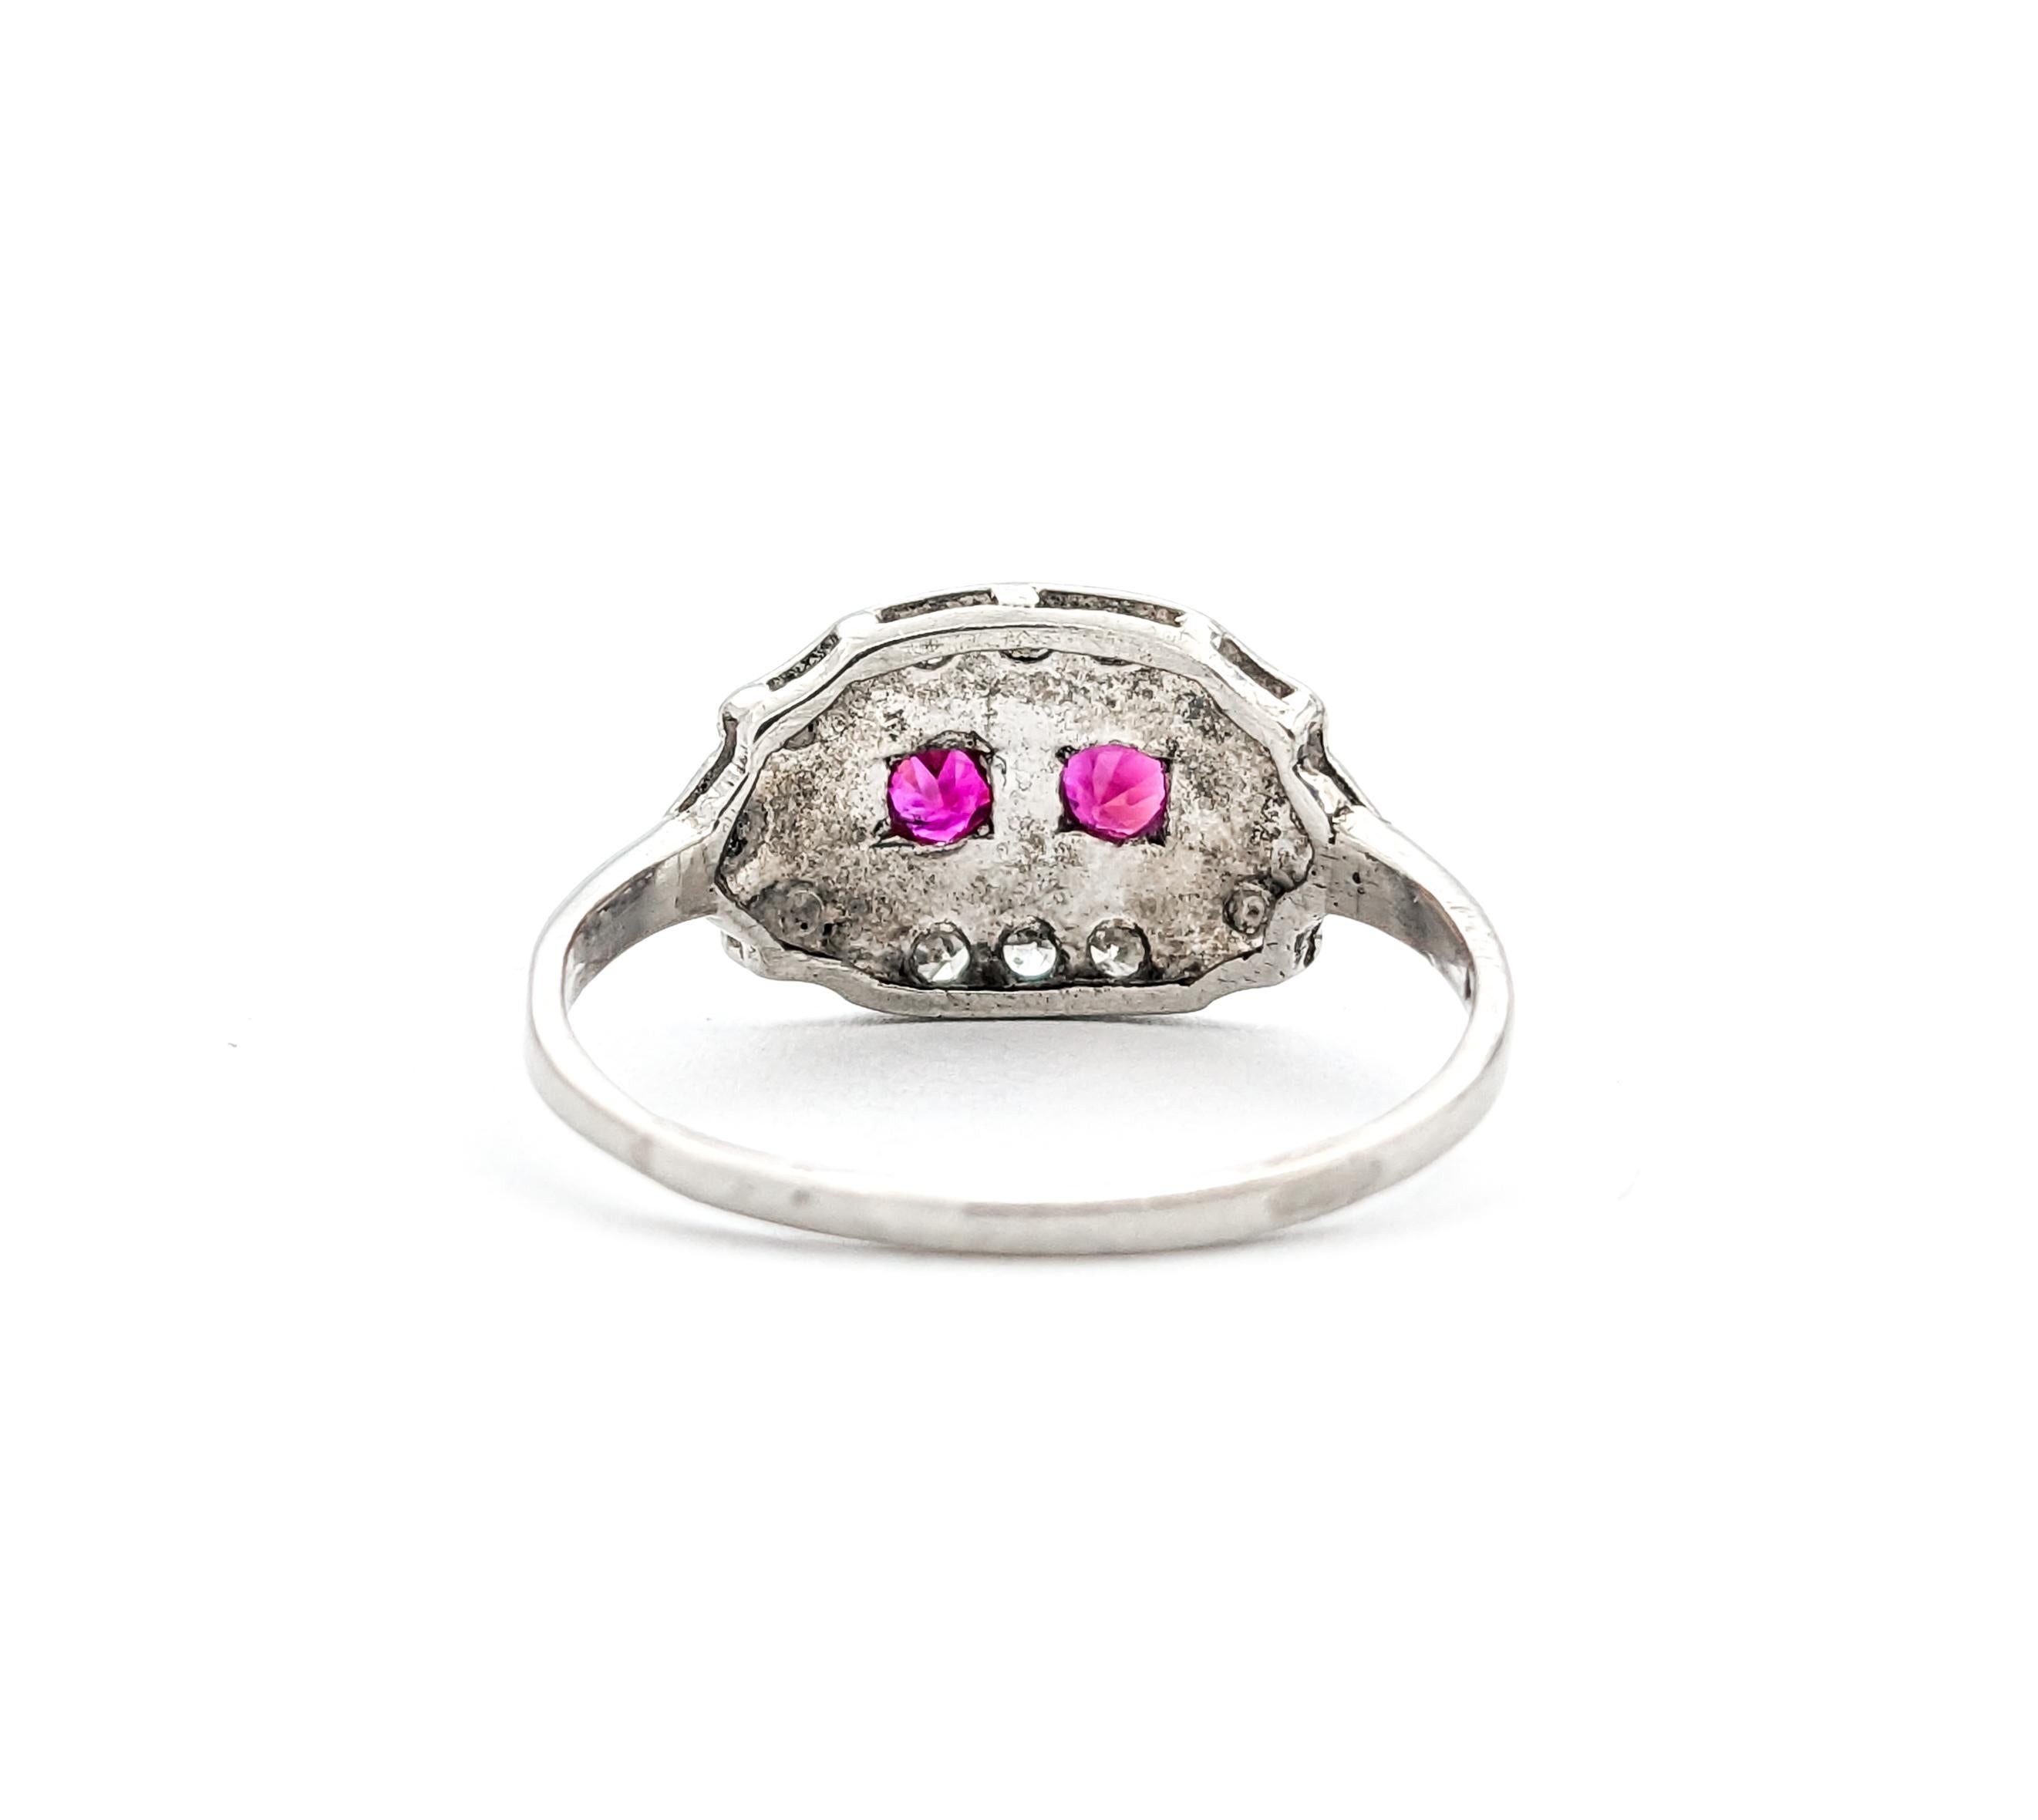 Rubies & Diamond Antique Ring In Platinum For Sale 3